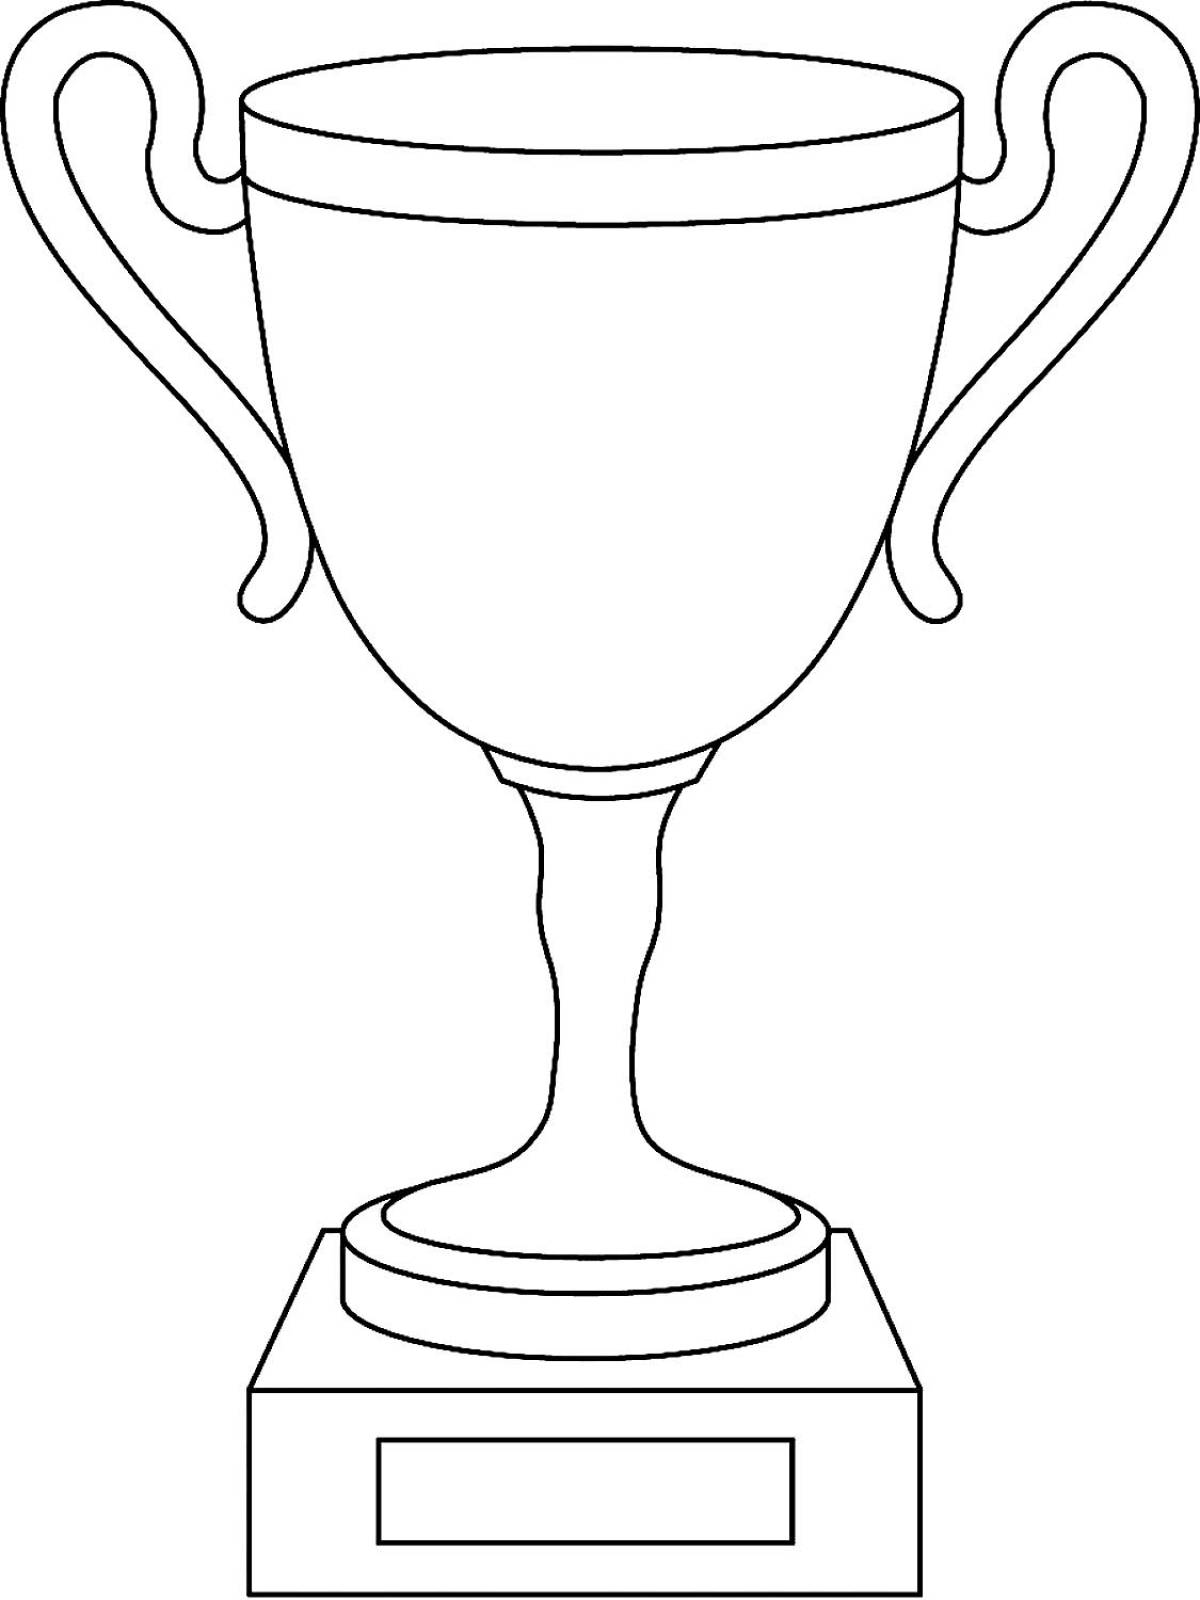 Award cup